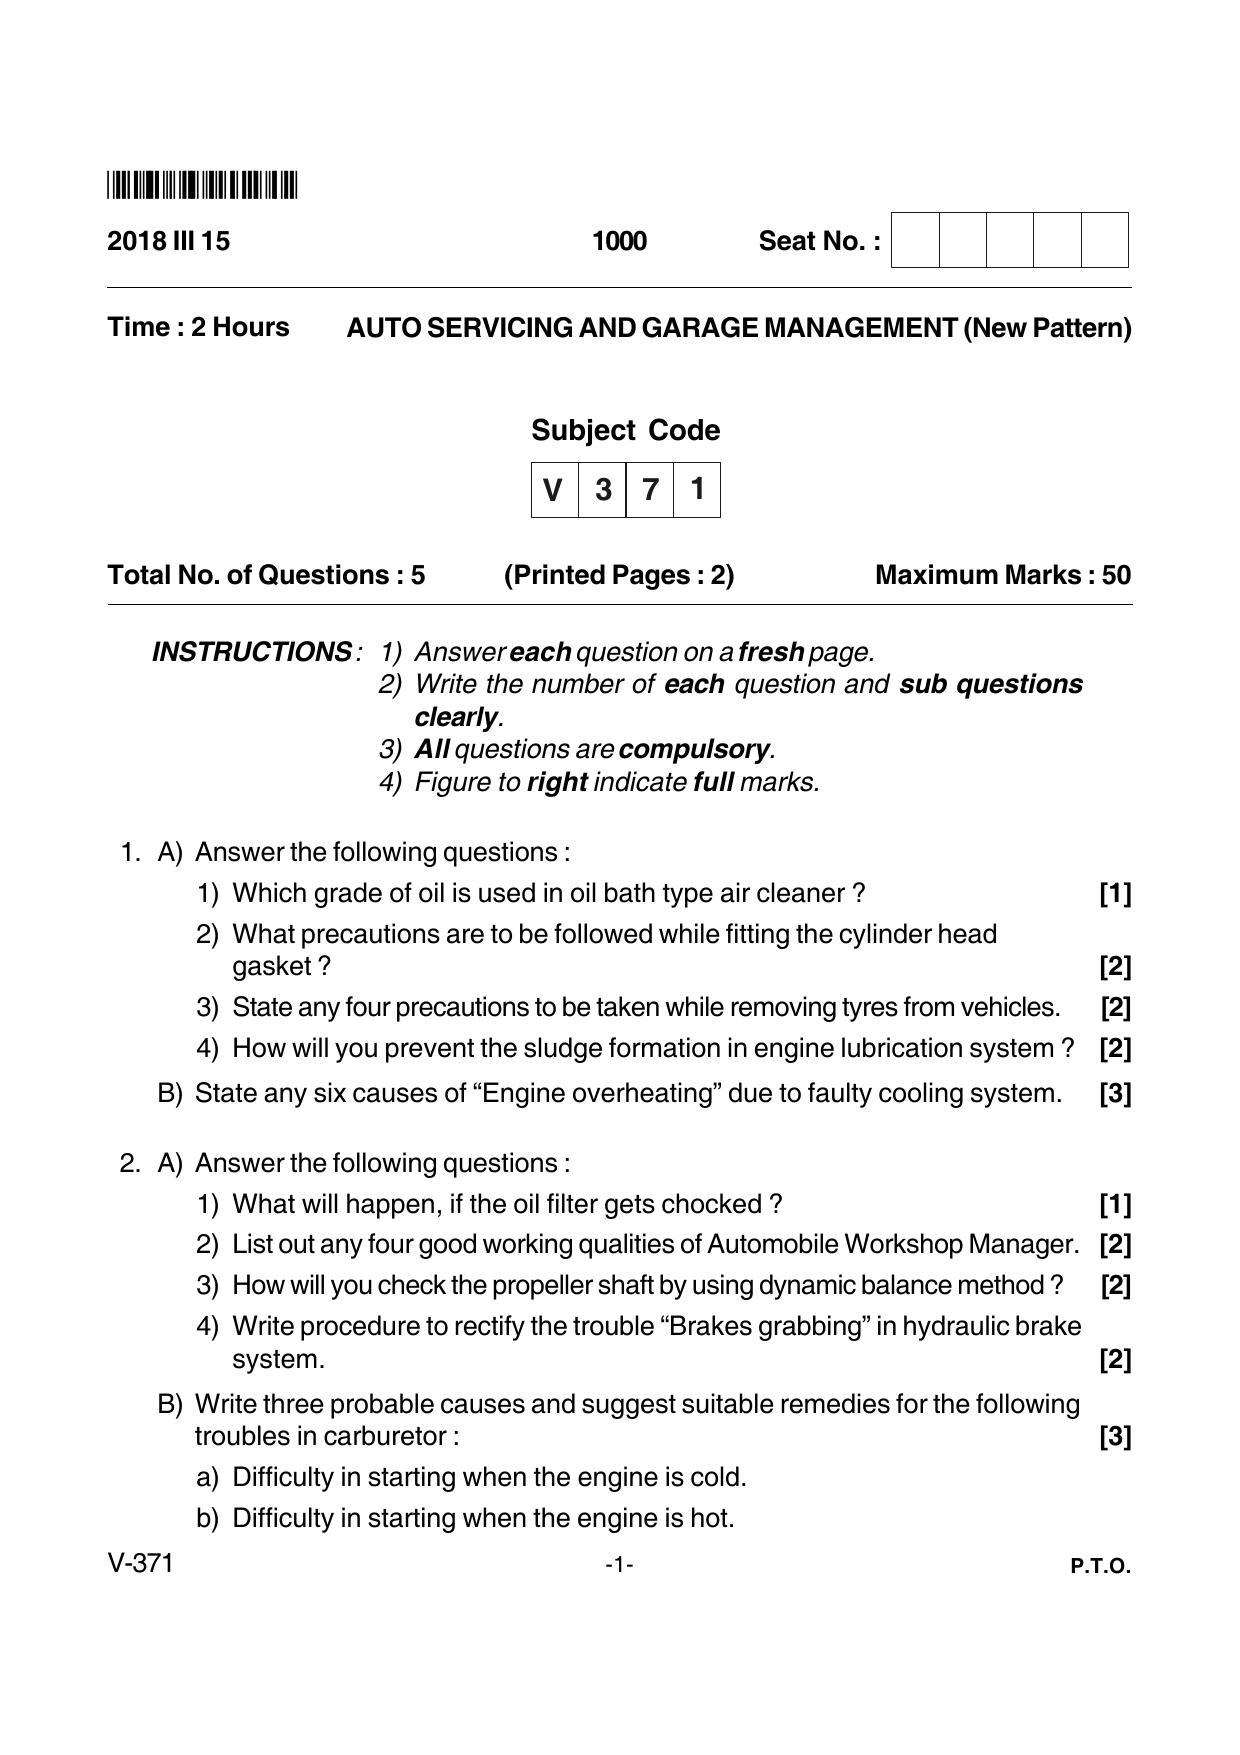 Goa Board Class 12 Auto Servicing & Garage Management  Voc 371 New Pattern (March 2018) Question Paper - Page 1